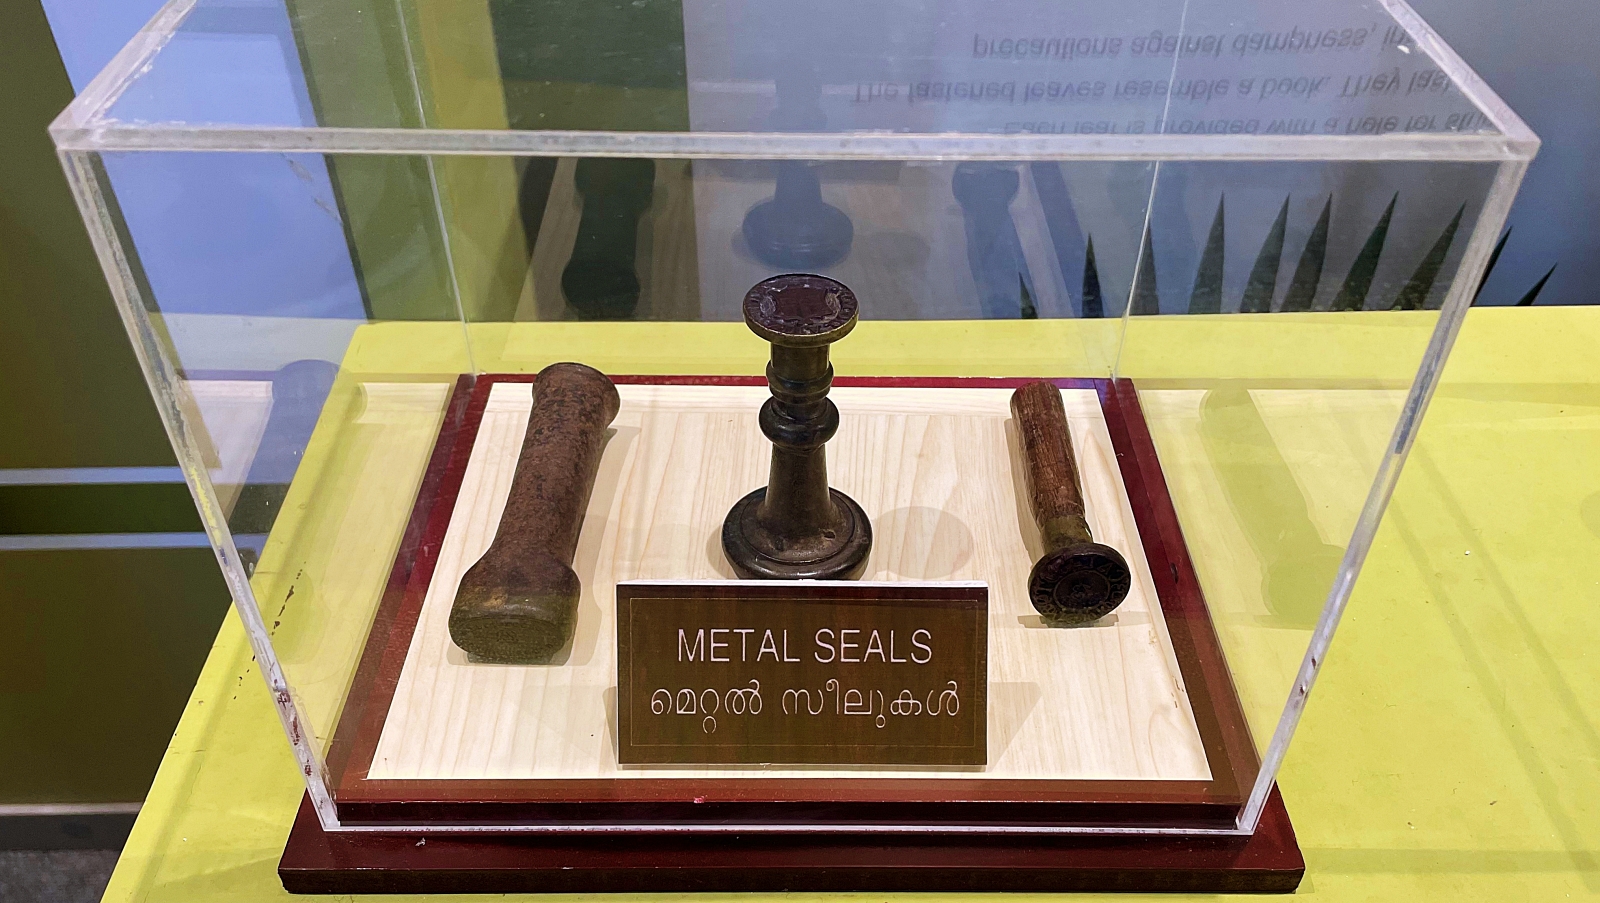 Metal Seals Palm Leaf Museum